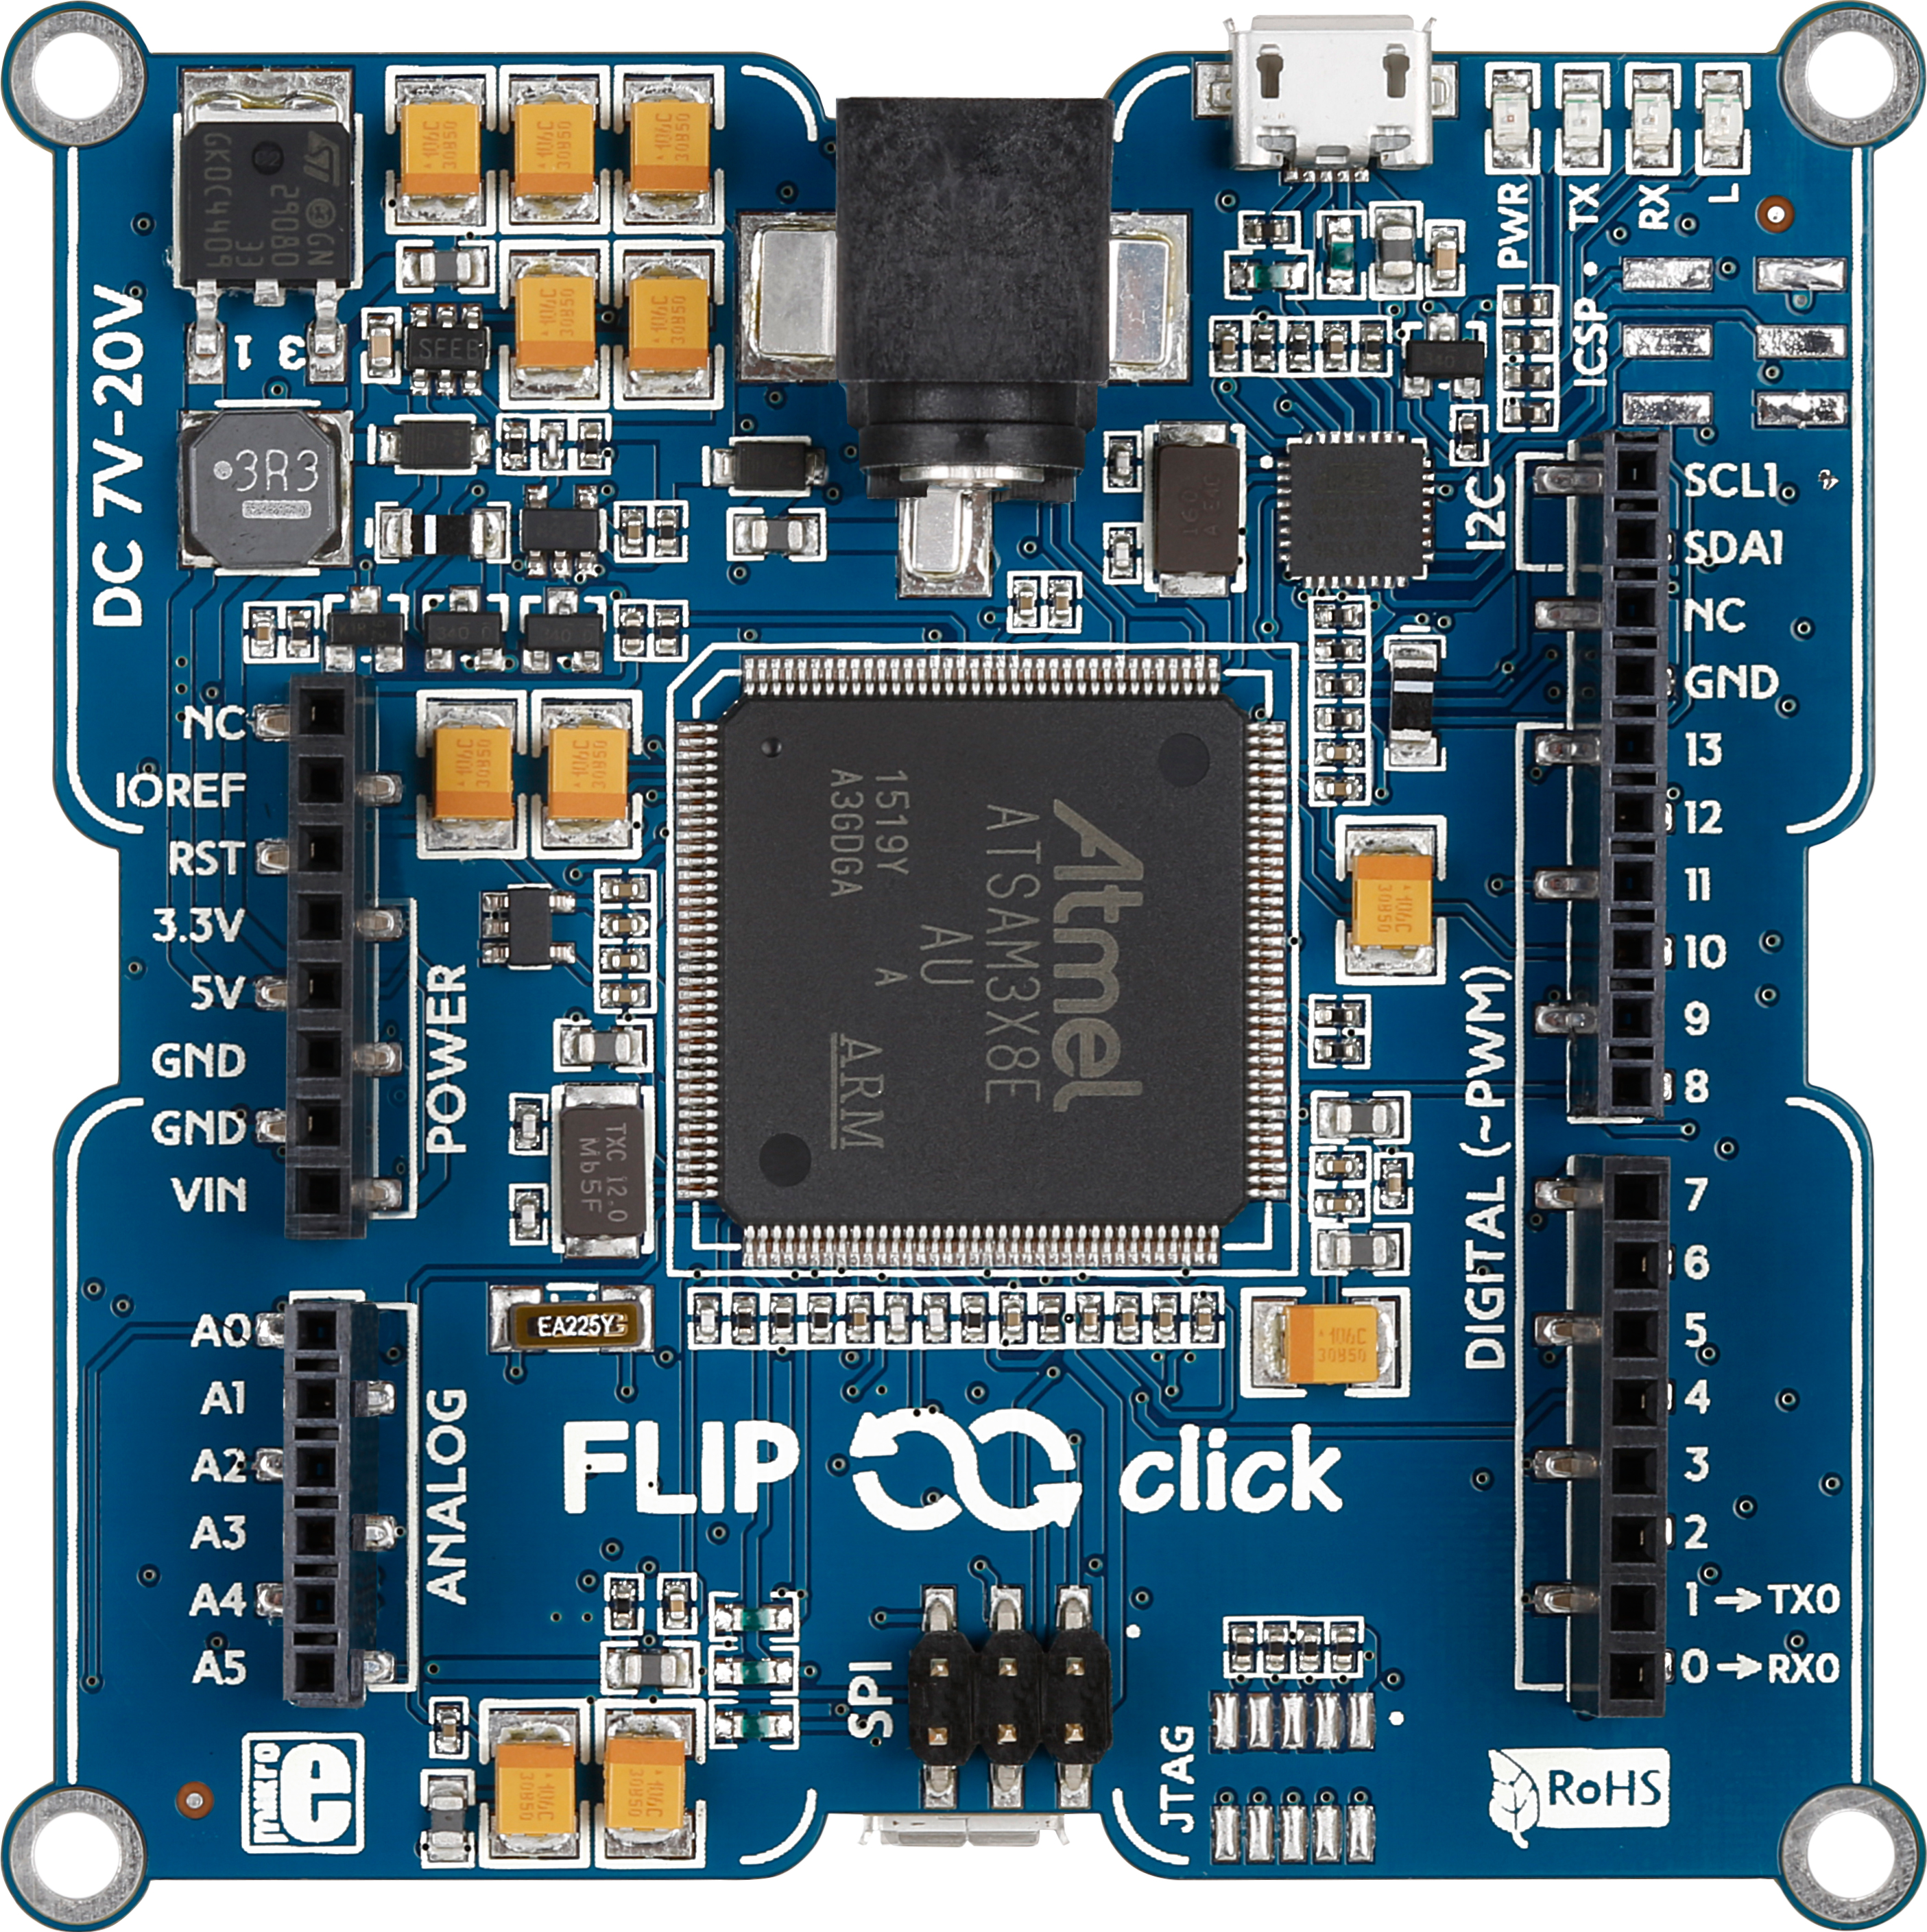 FLIP & CLICK @ electrokit